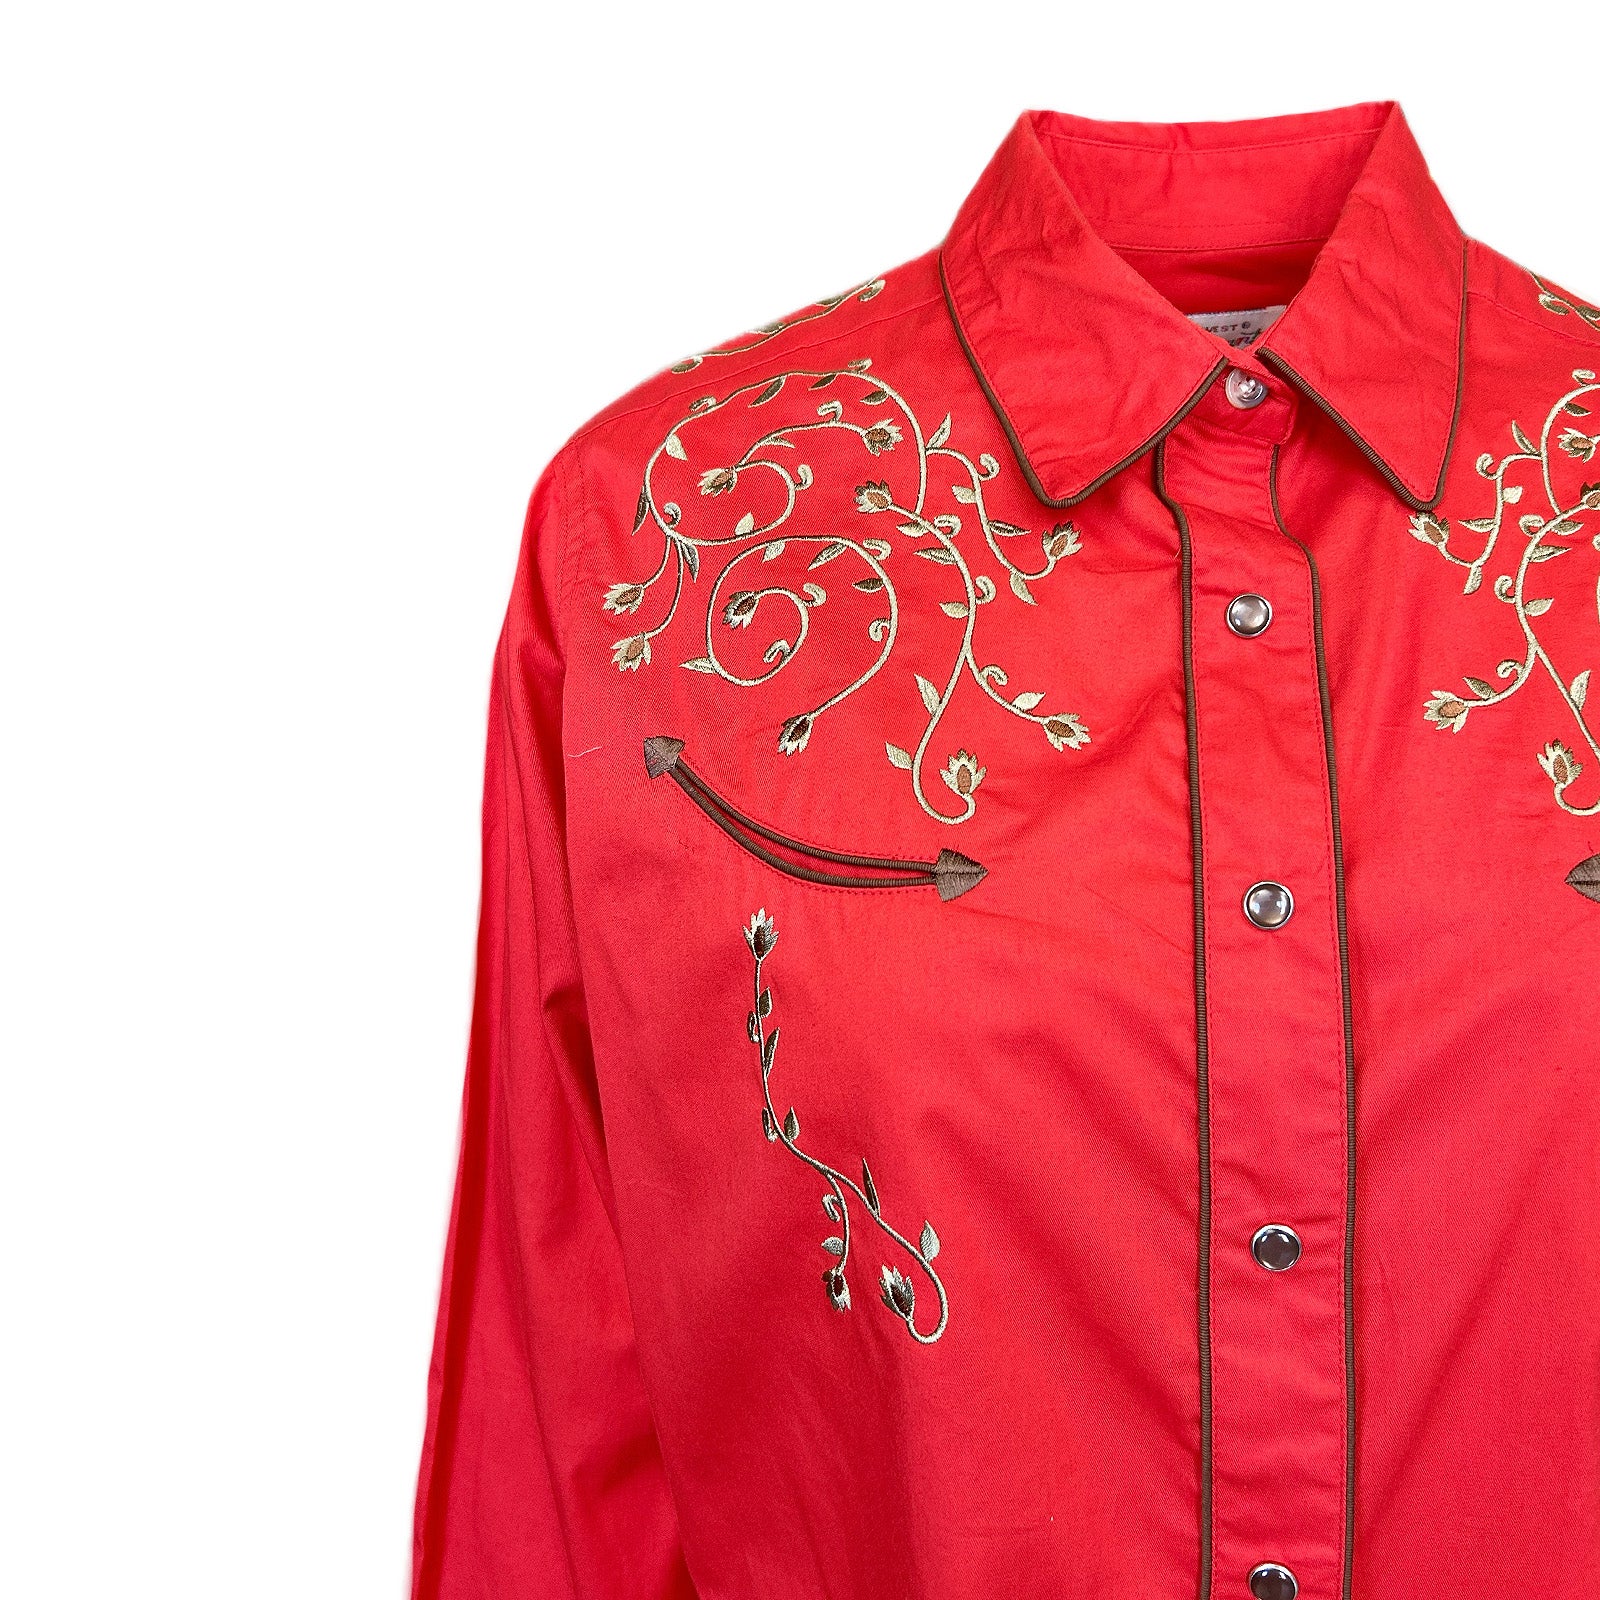 Women’s Rhinestones & Scrolls Embroidery Western Shirt in Red